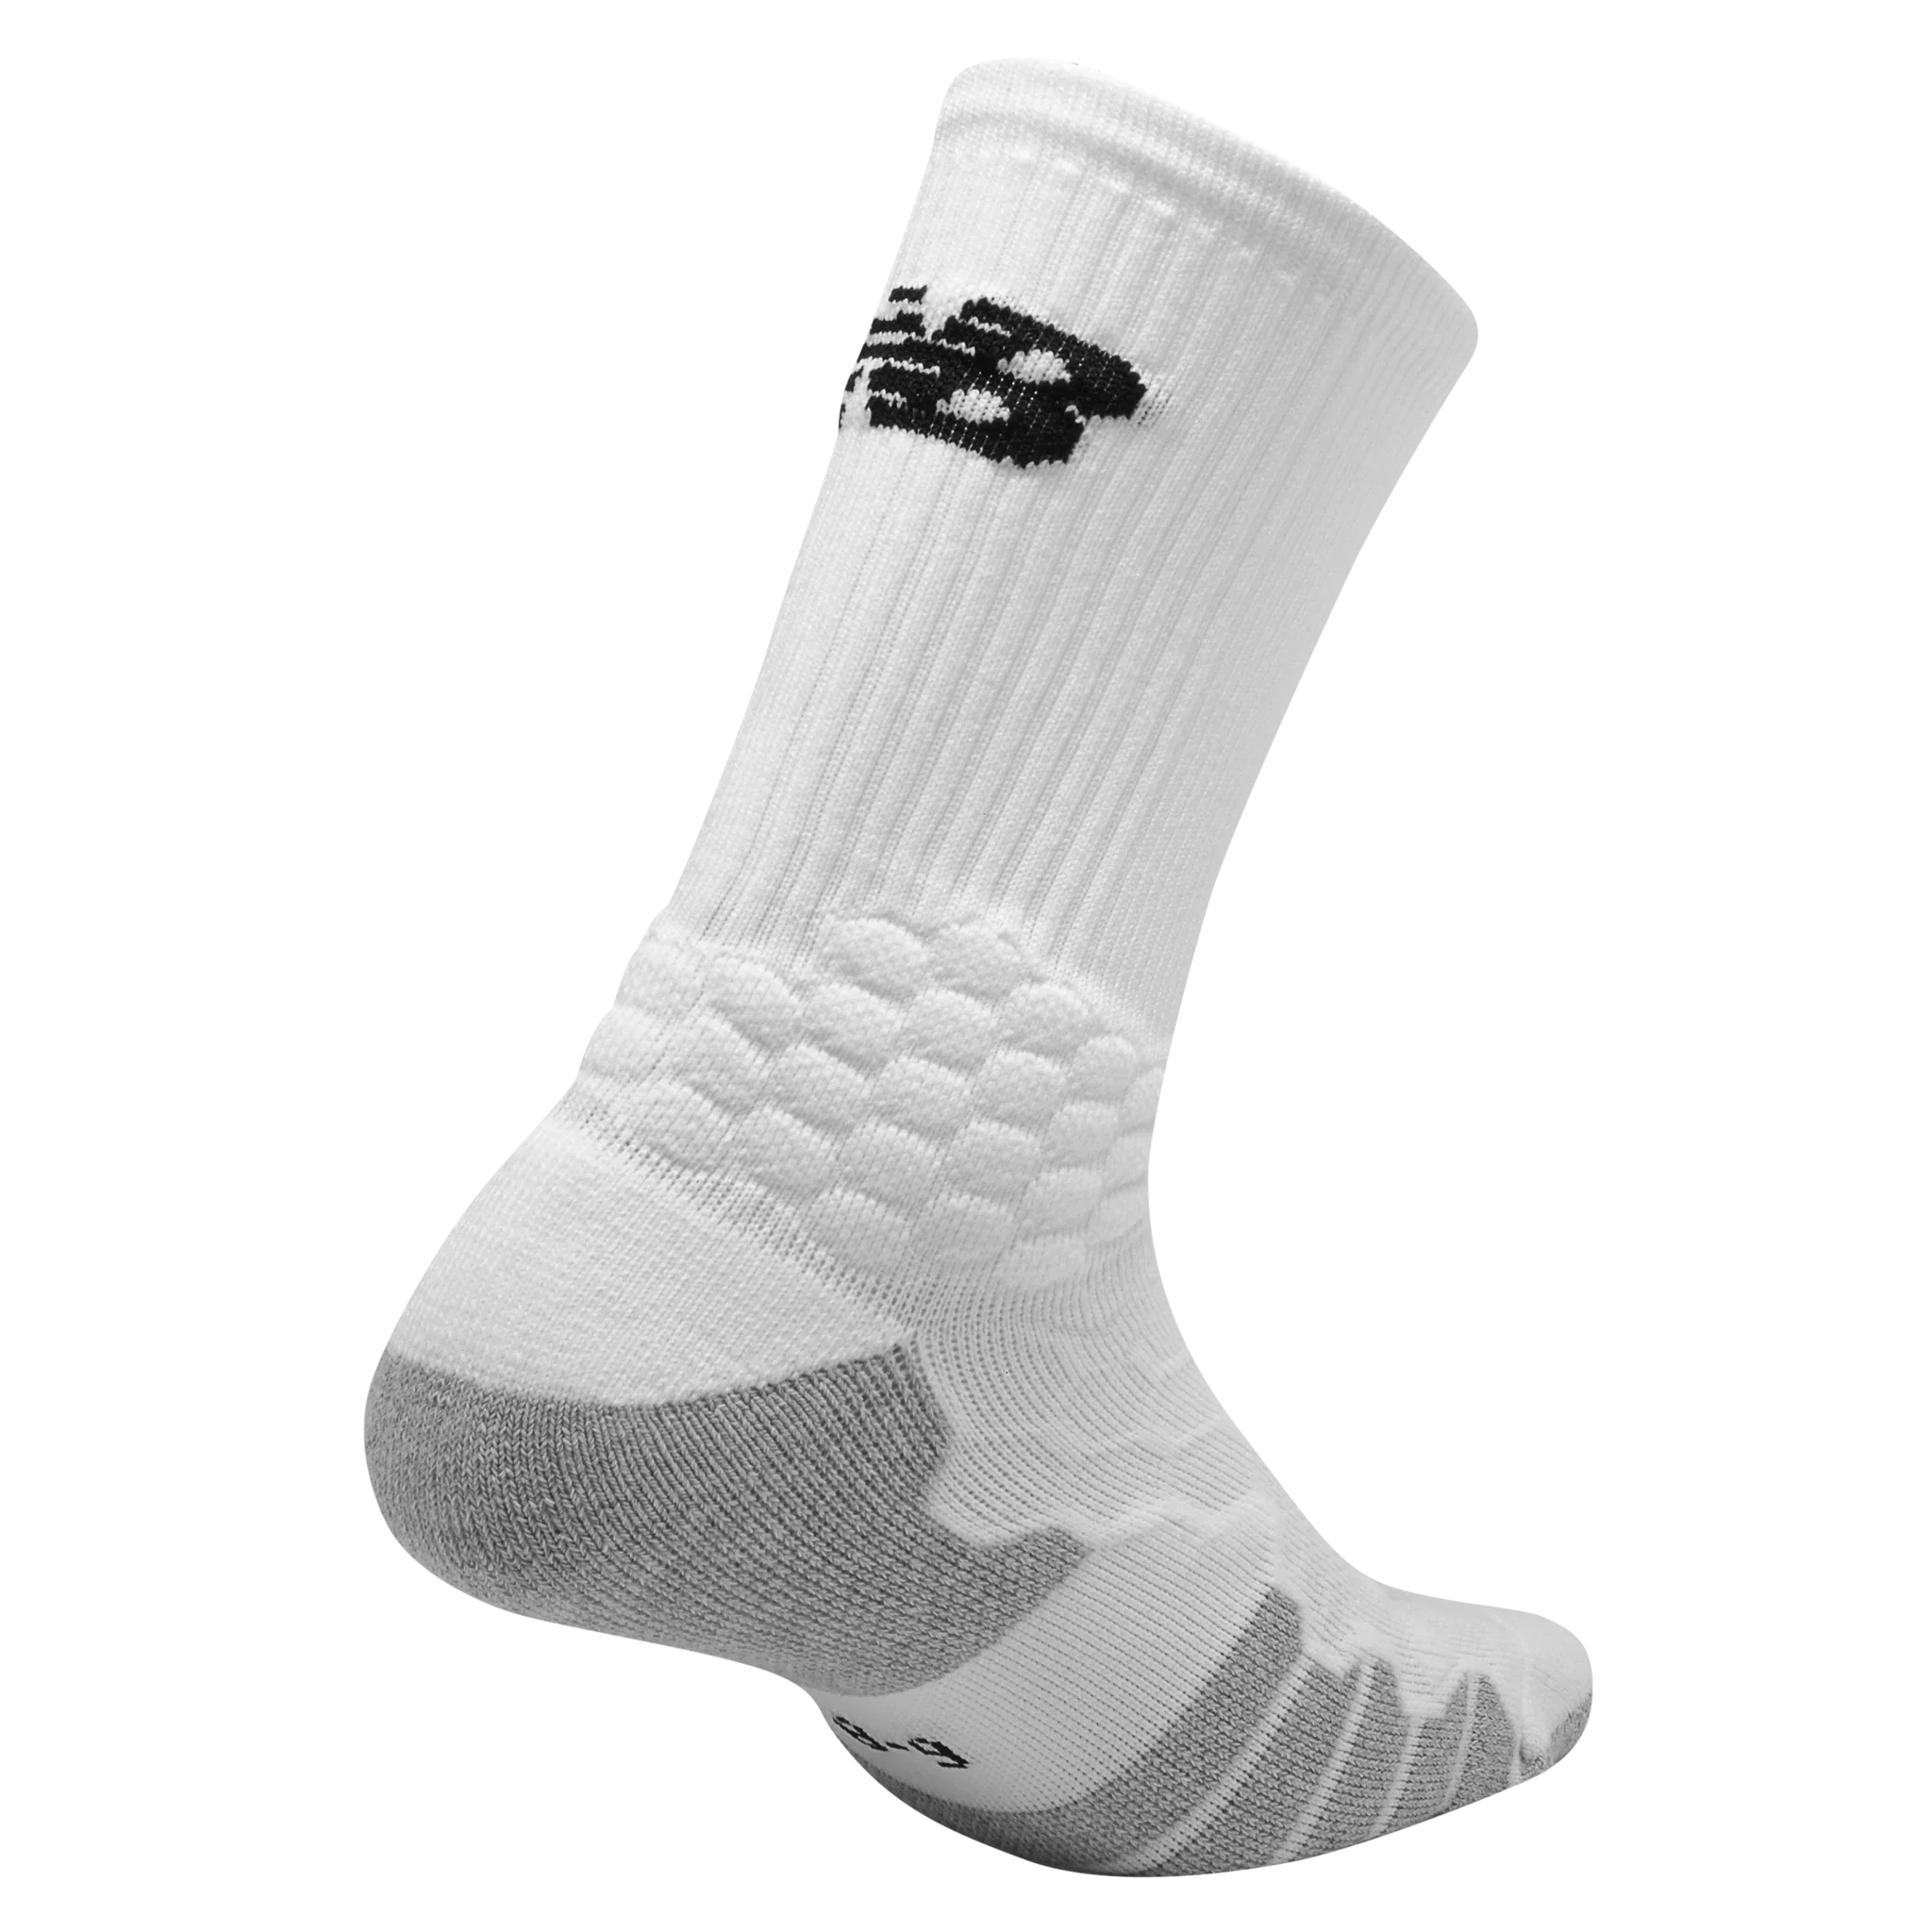 New Balance Core Training Ankle Sock